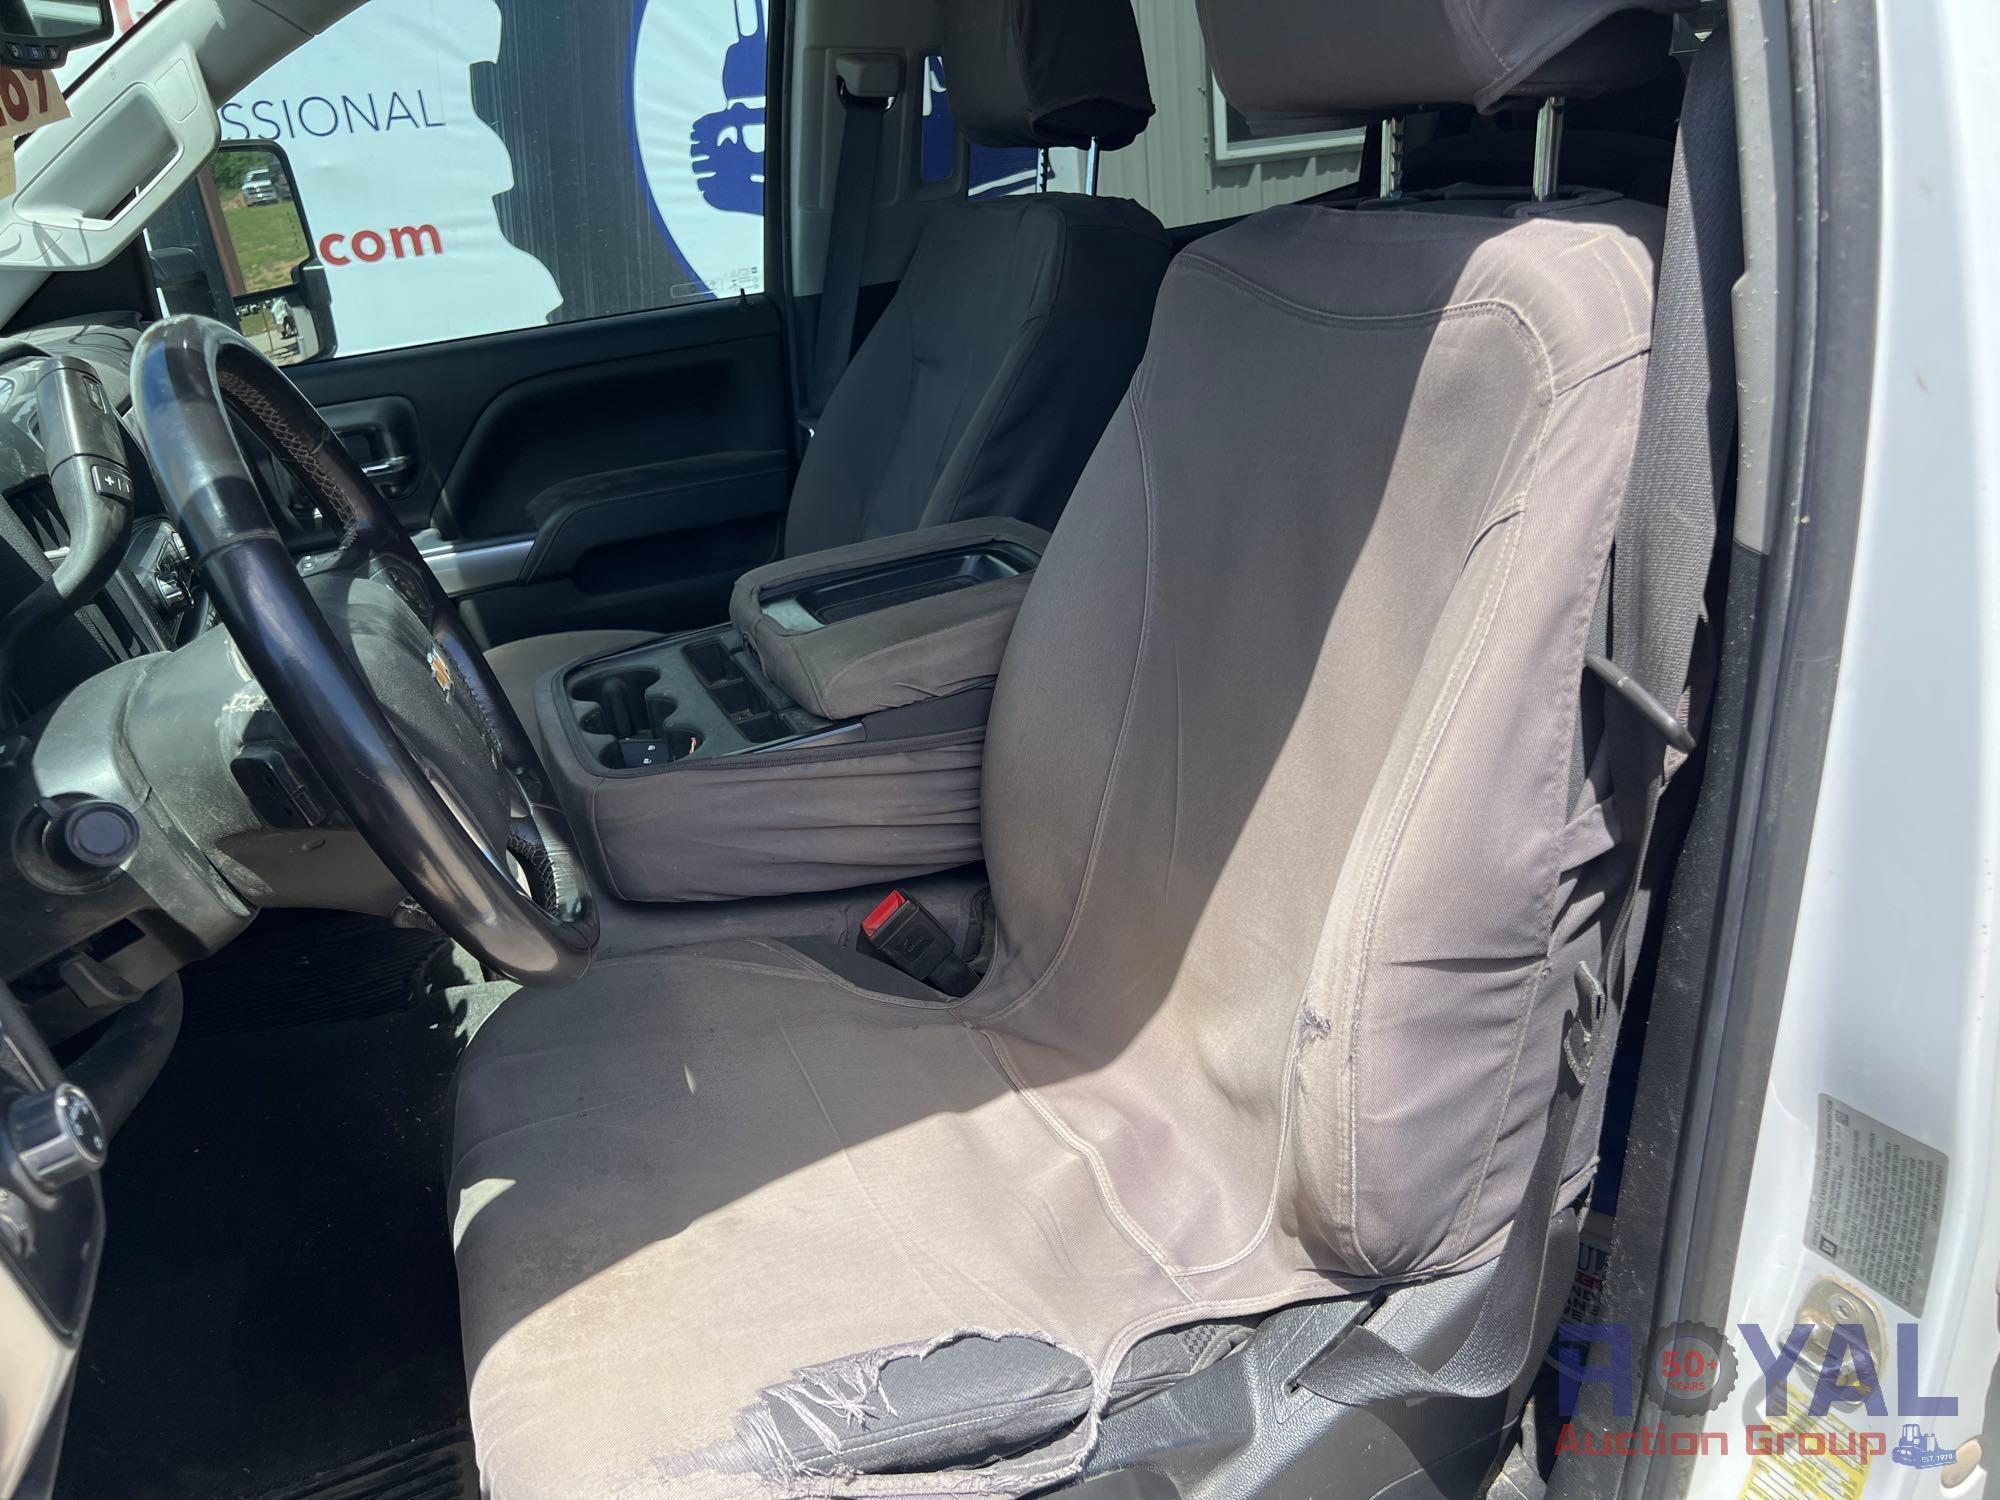 2018 Chevrolet 2500HD 4x4 Crew Cab Diesel Service Truck